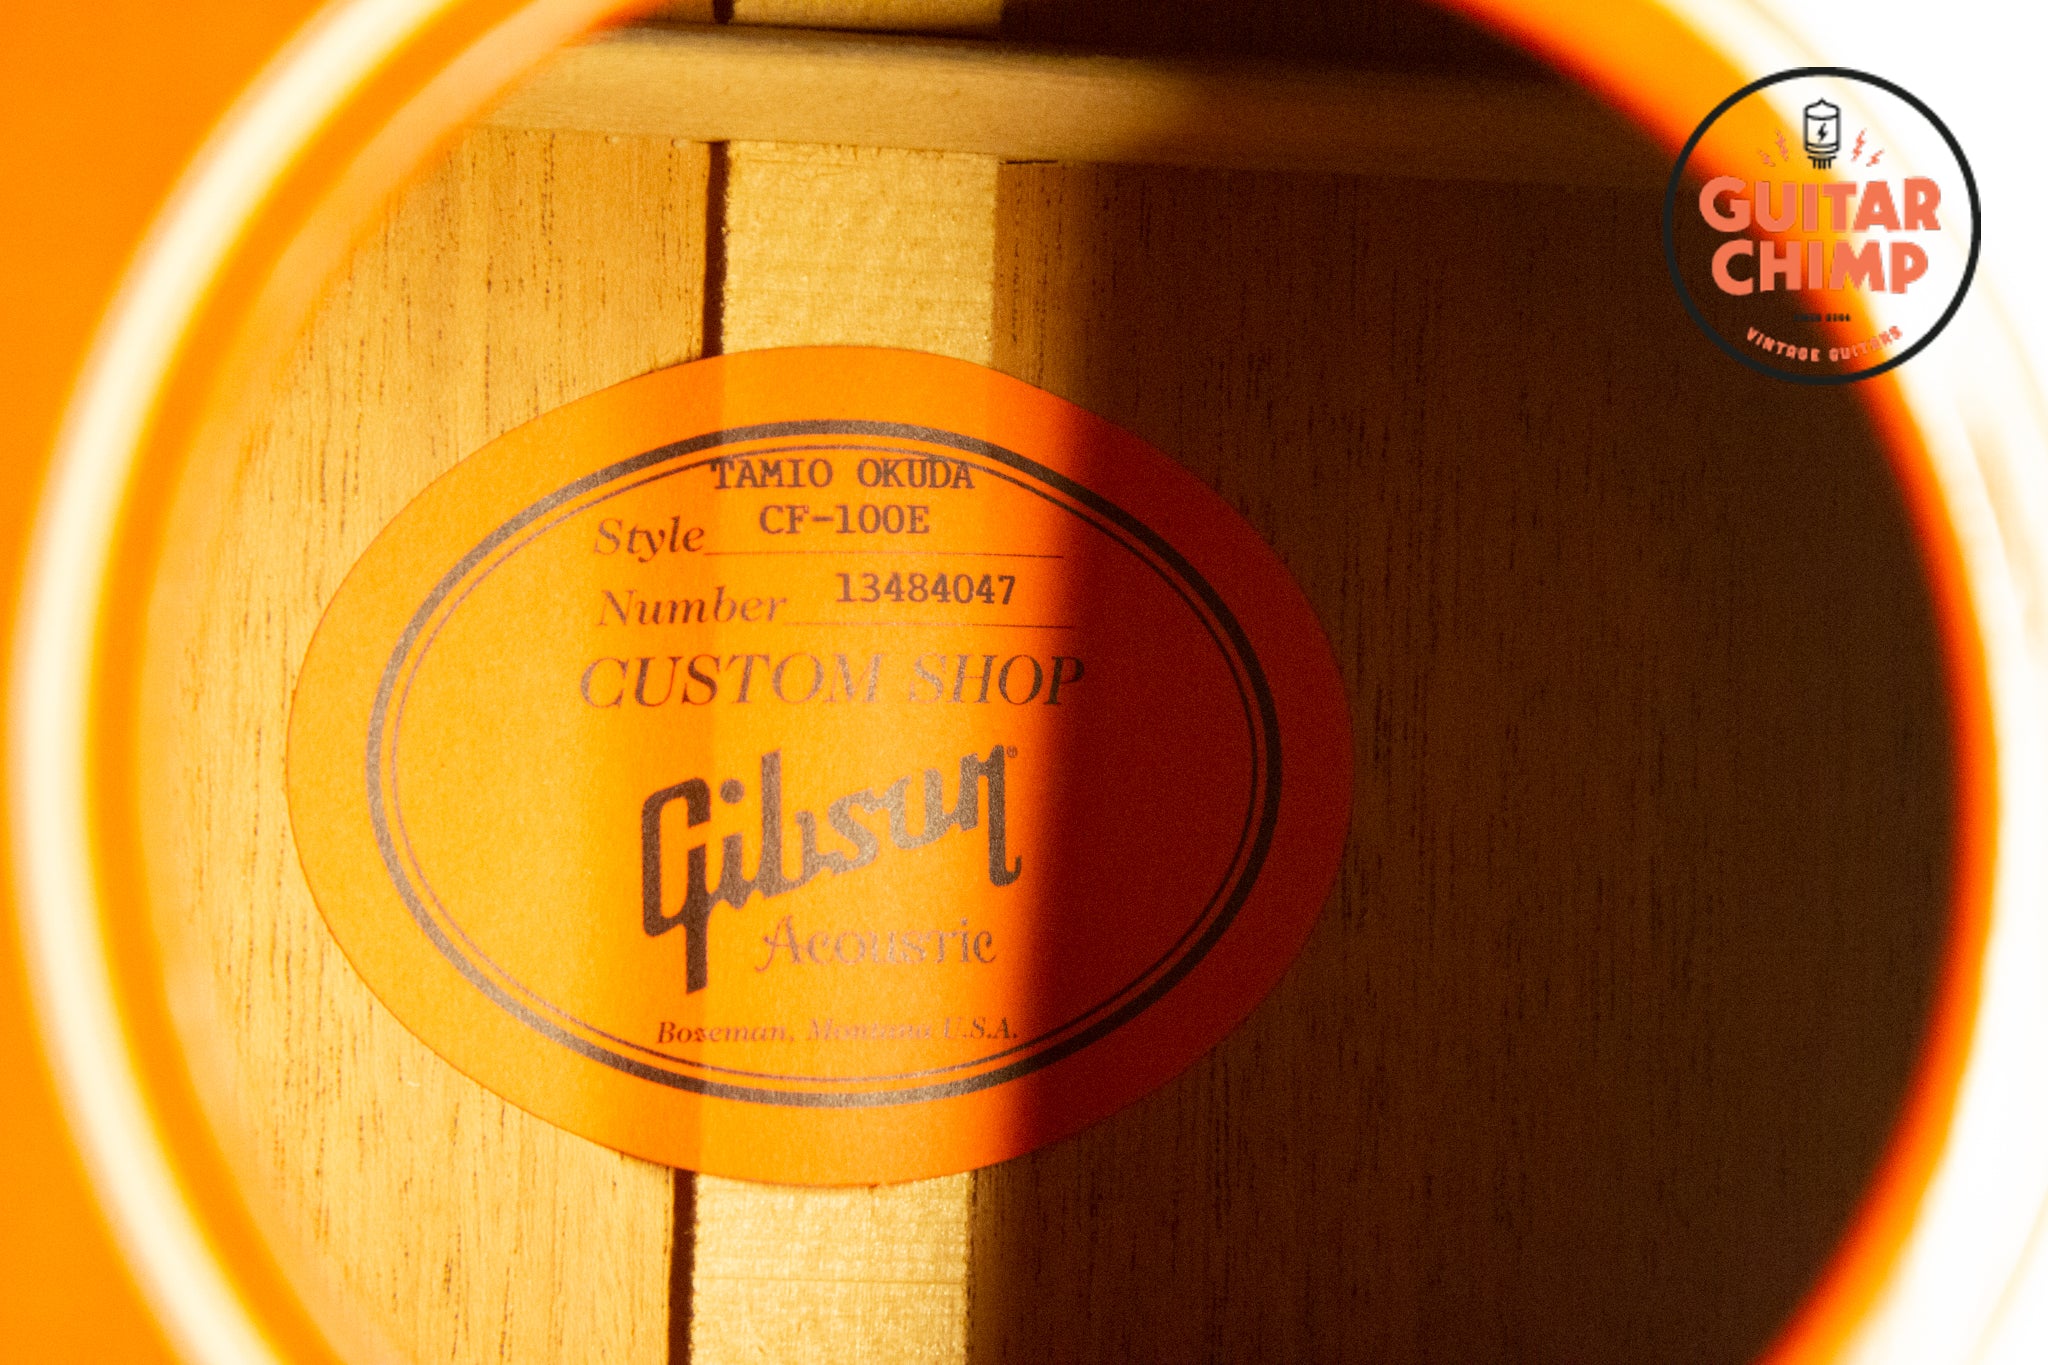 2014 Gibson Tamio Okuda CF-100E Faded Cherry | Guitar Chimp